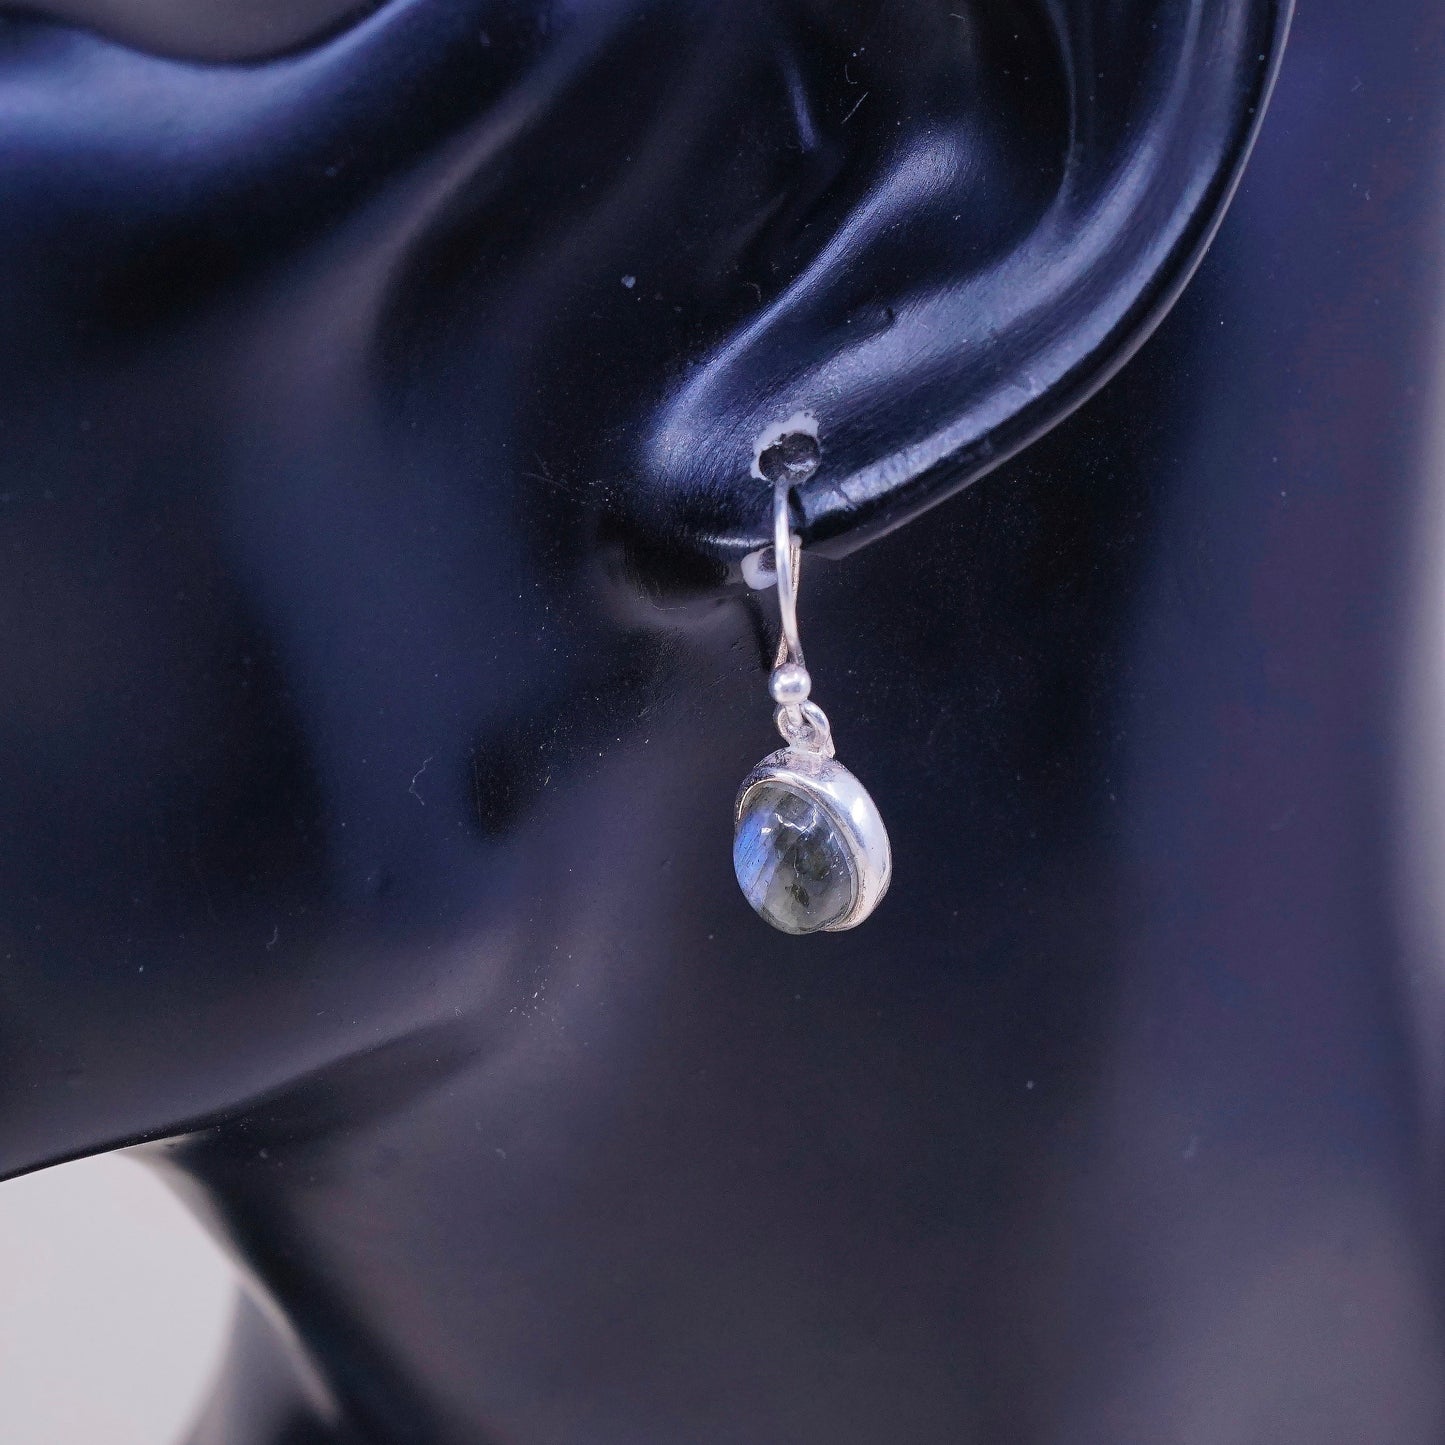 Vintage Sterling 925 silver handmade earrings with labradorite drops